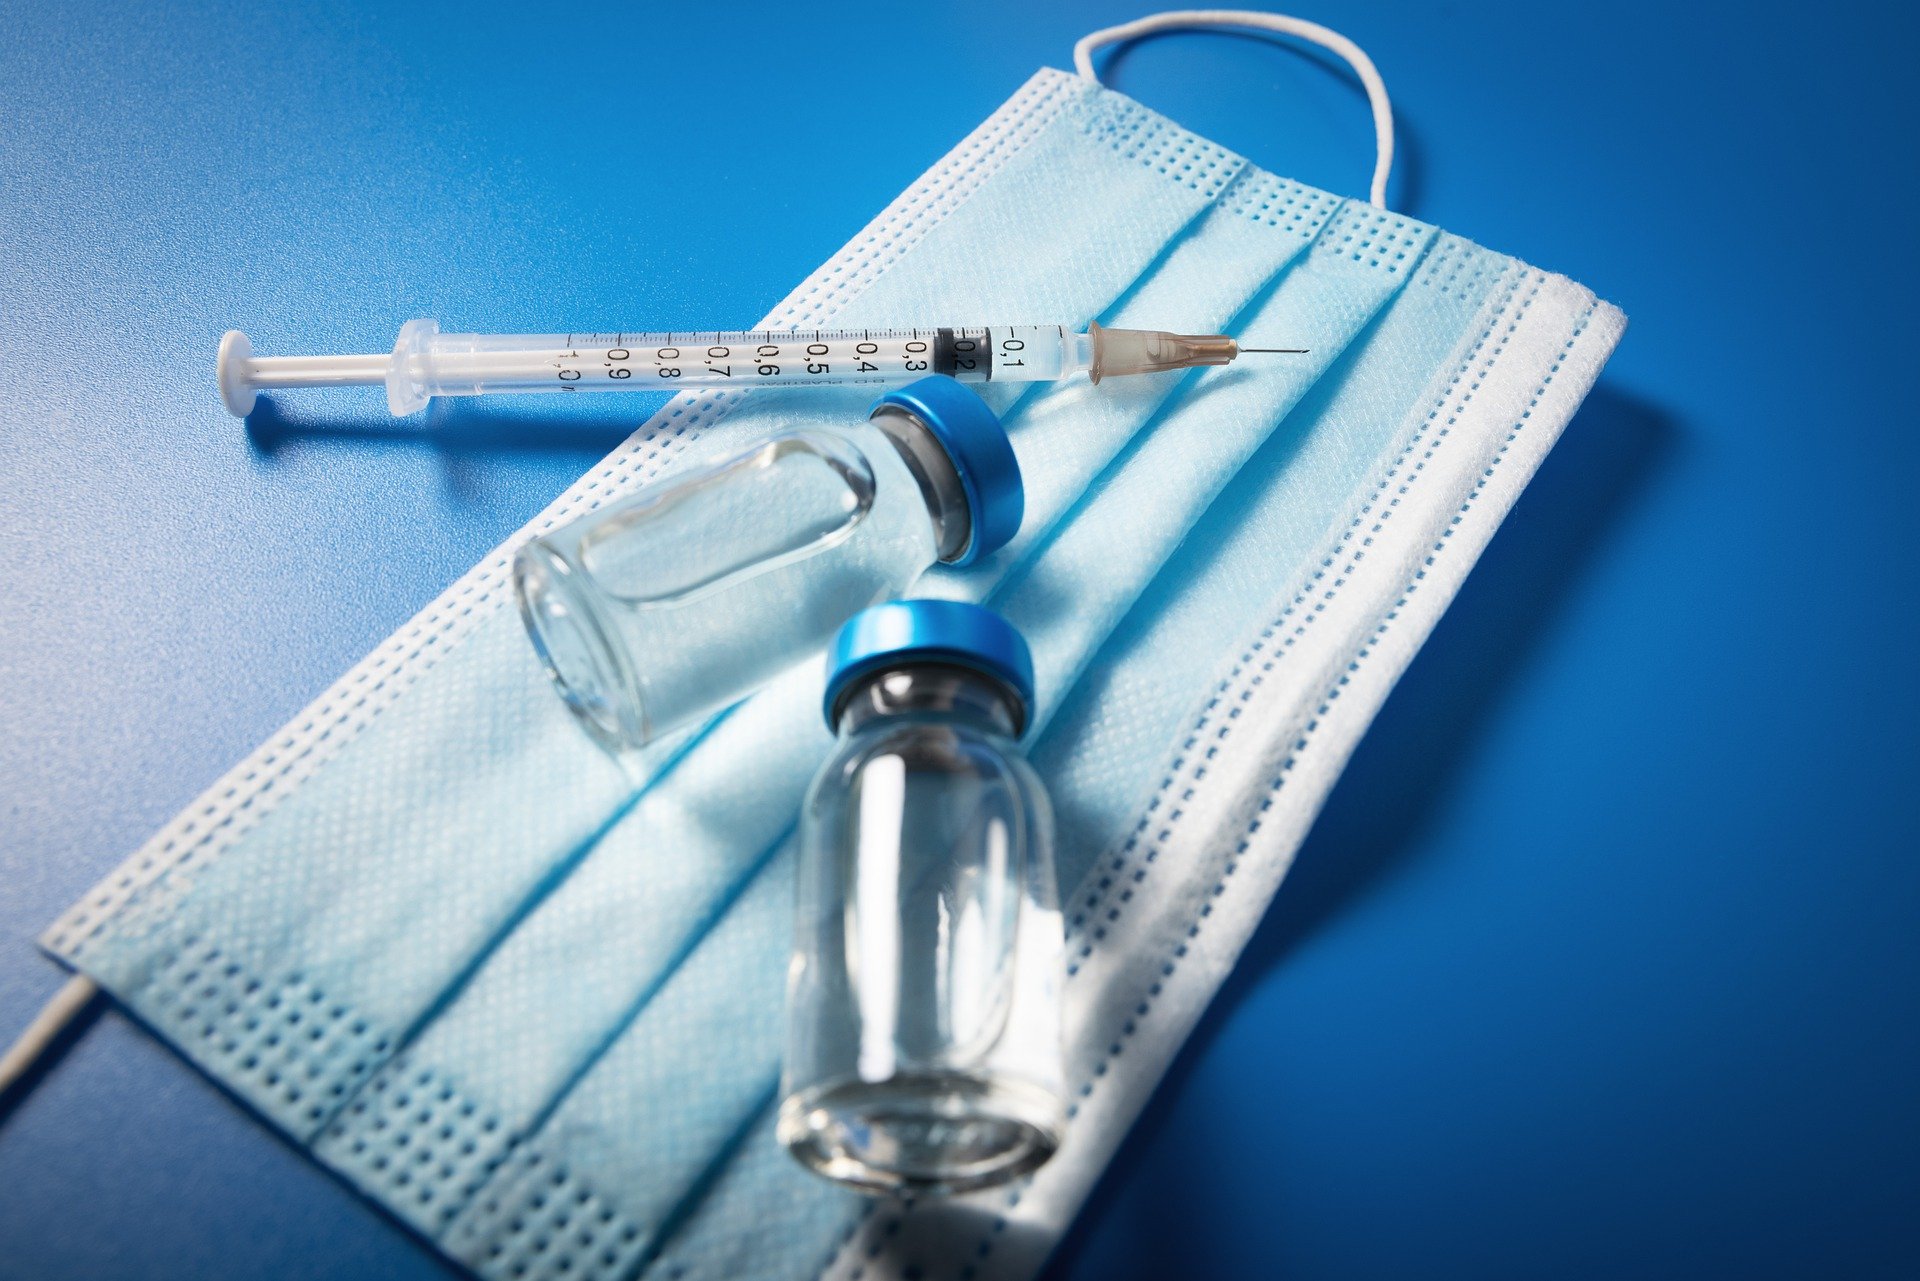 De la 1 iulie: Vaccinarea anti-Covid se va face doar la medicii de familie